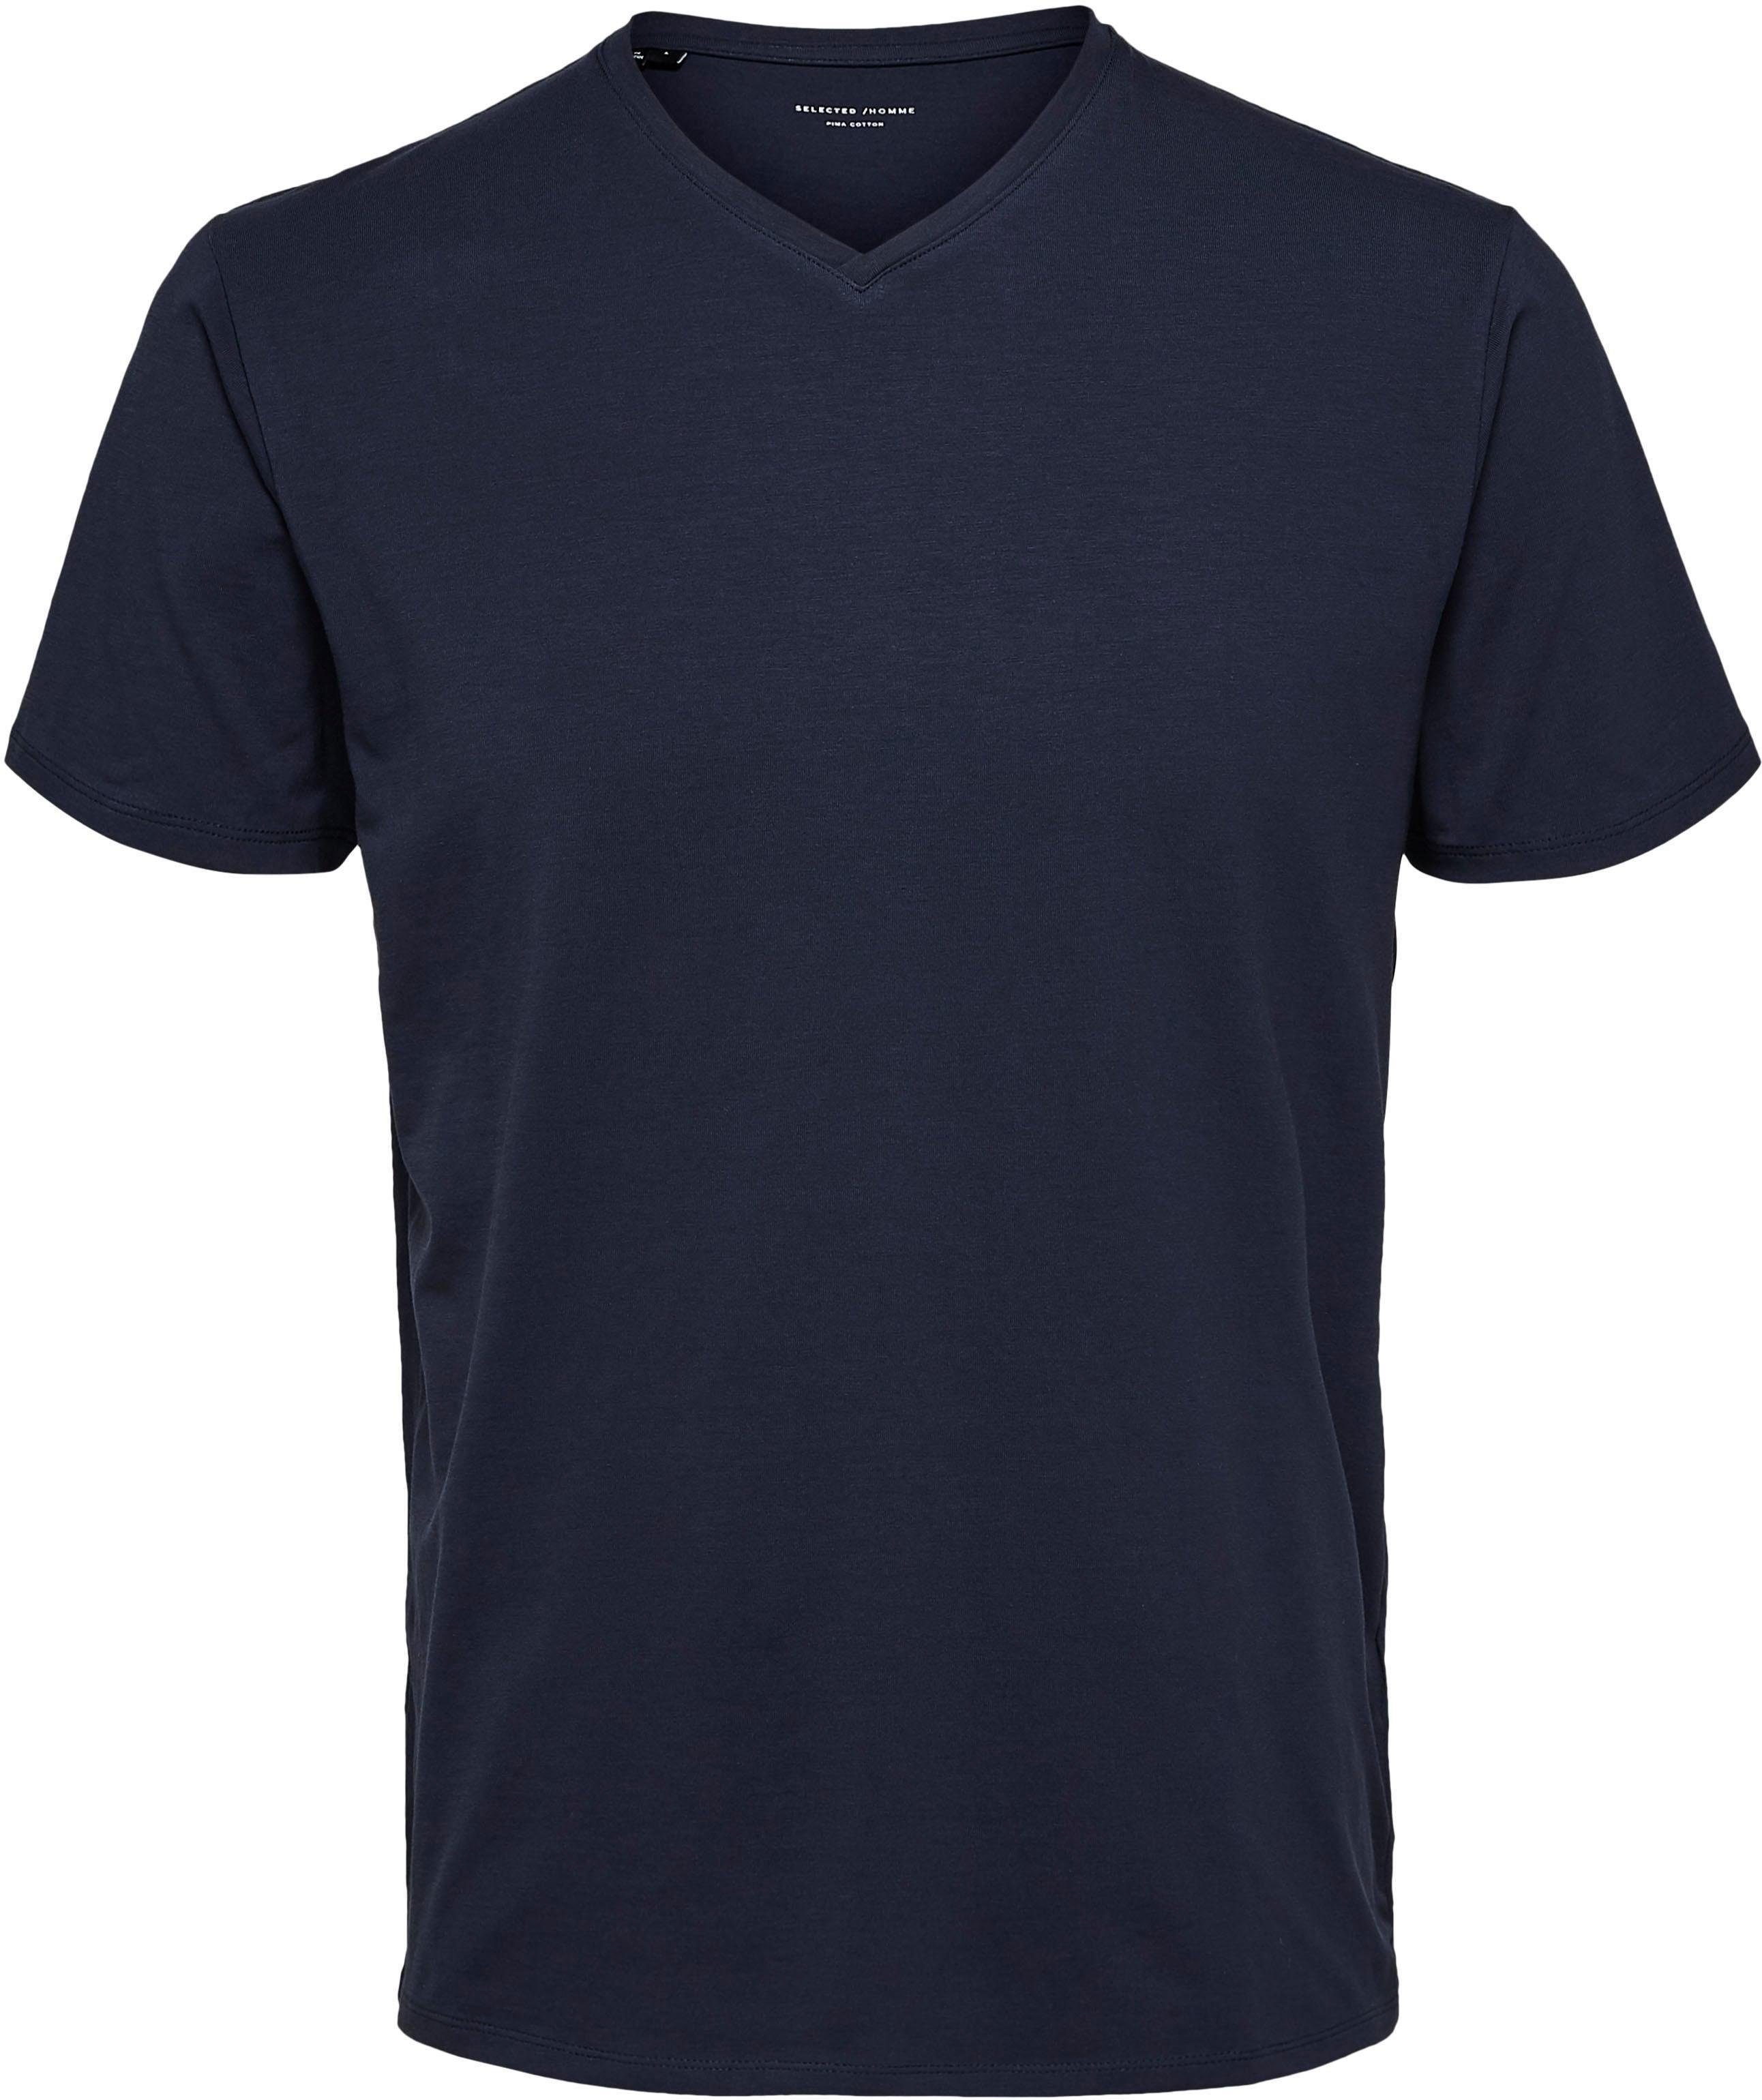 SELECTED HOMME V-Shirt Basic V-Shirt Navy Blazer